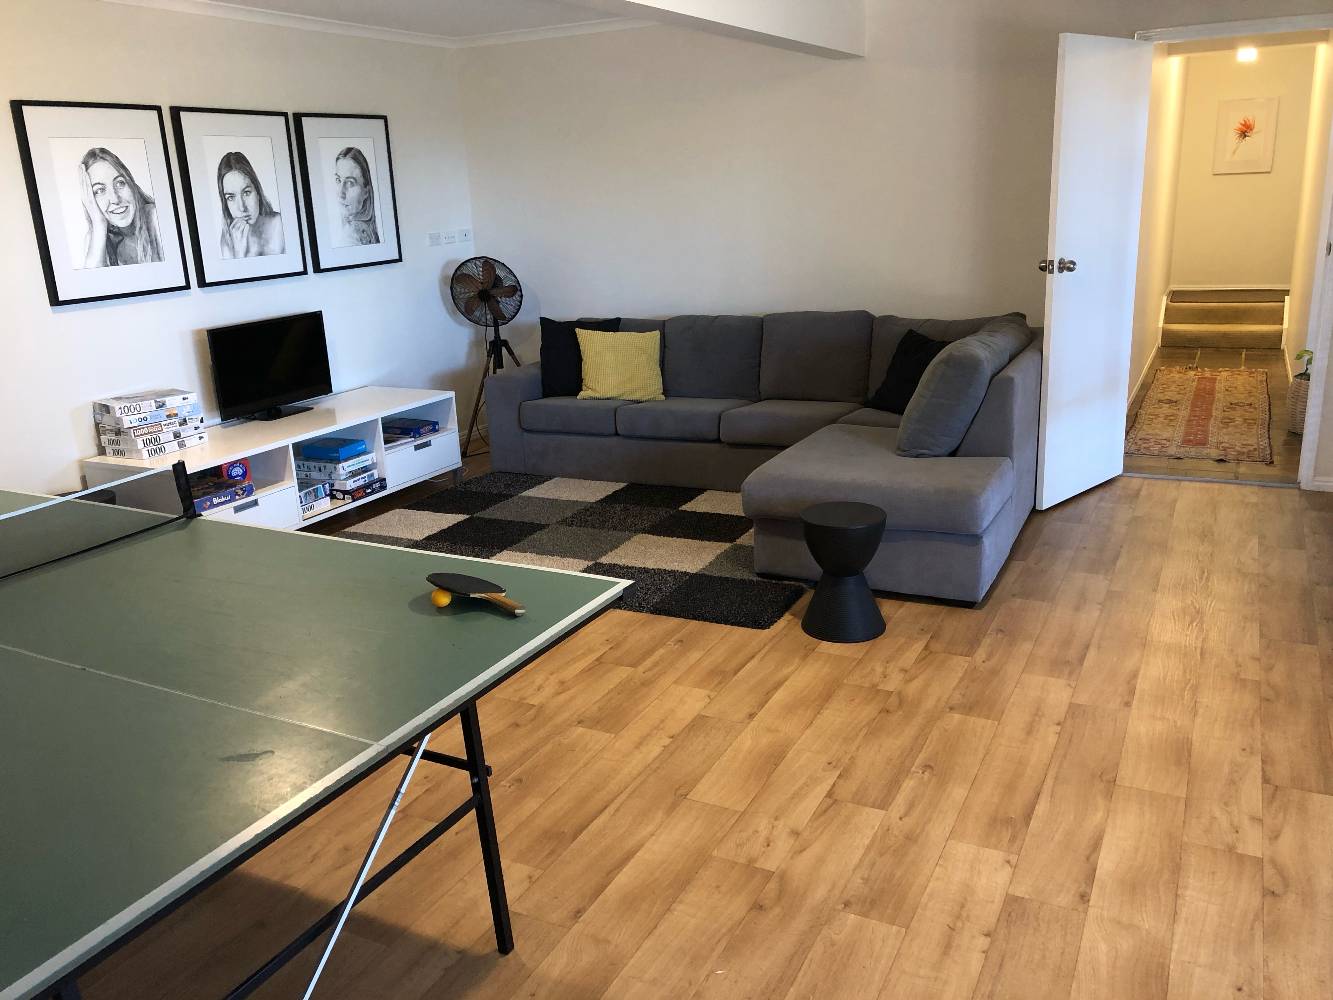 Rumpus room with table tennis